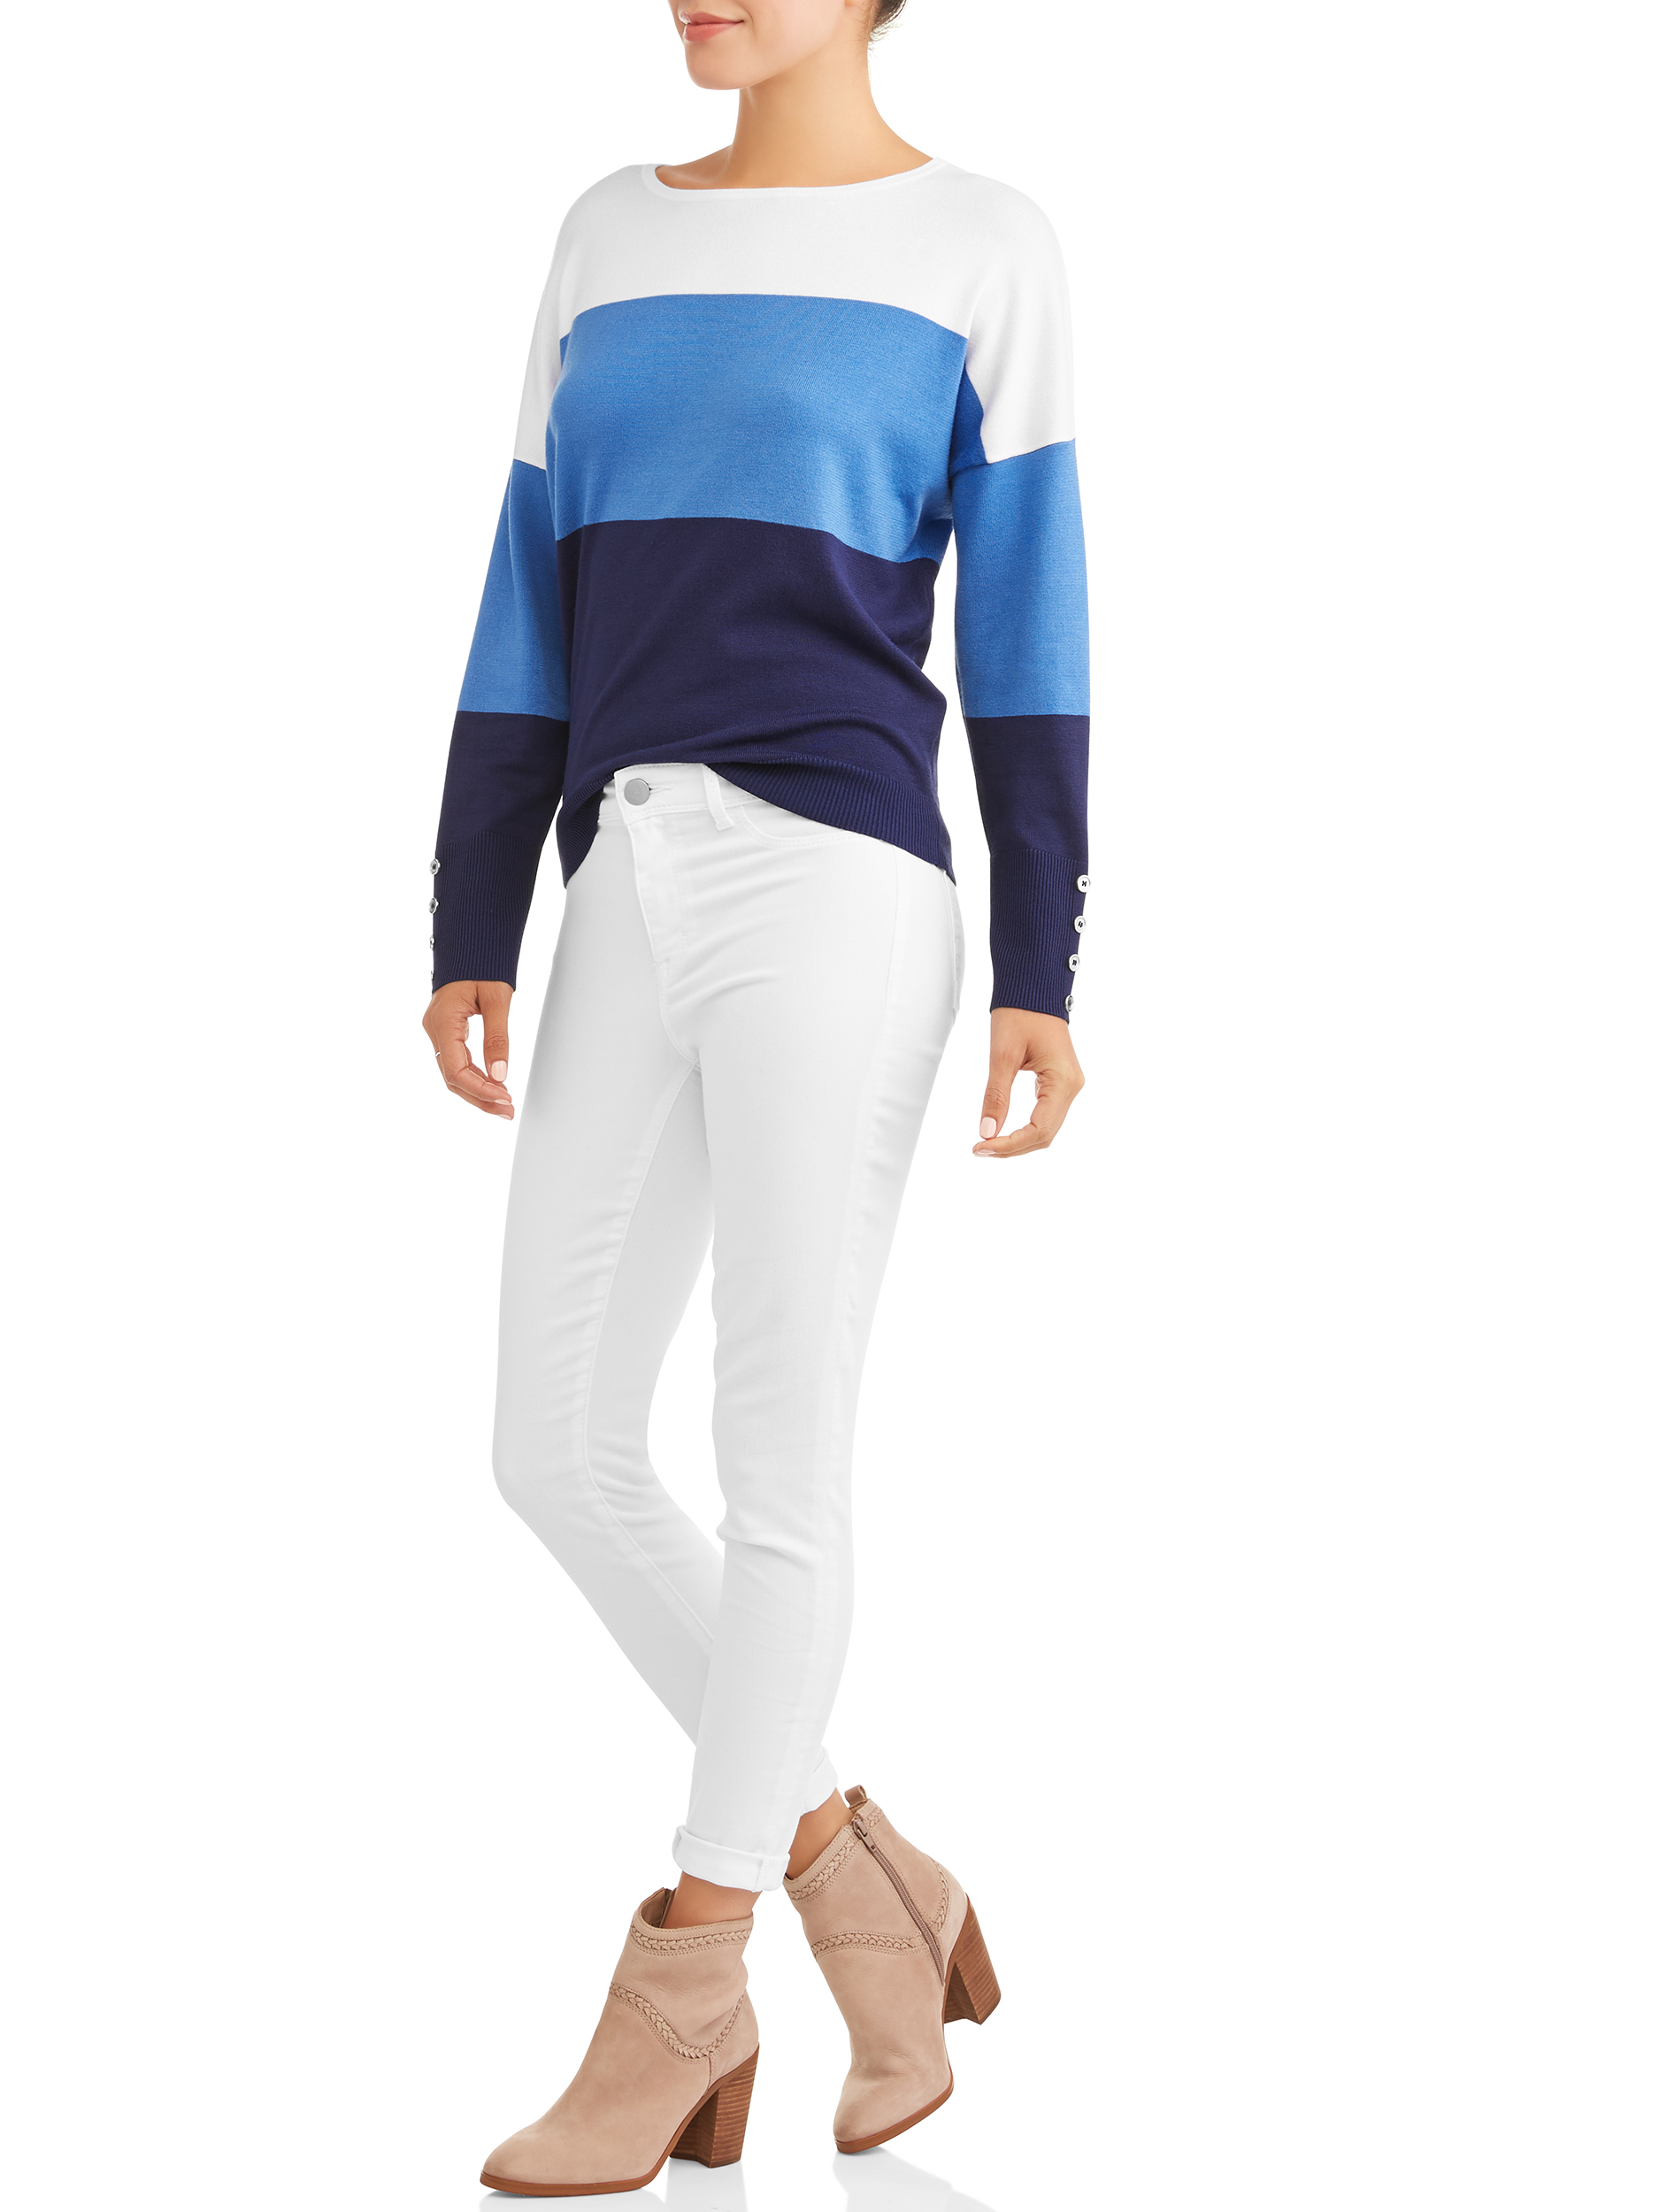 Women's Colorblock Dolman Sleeve Sweater - image 3 of 4